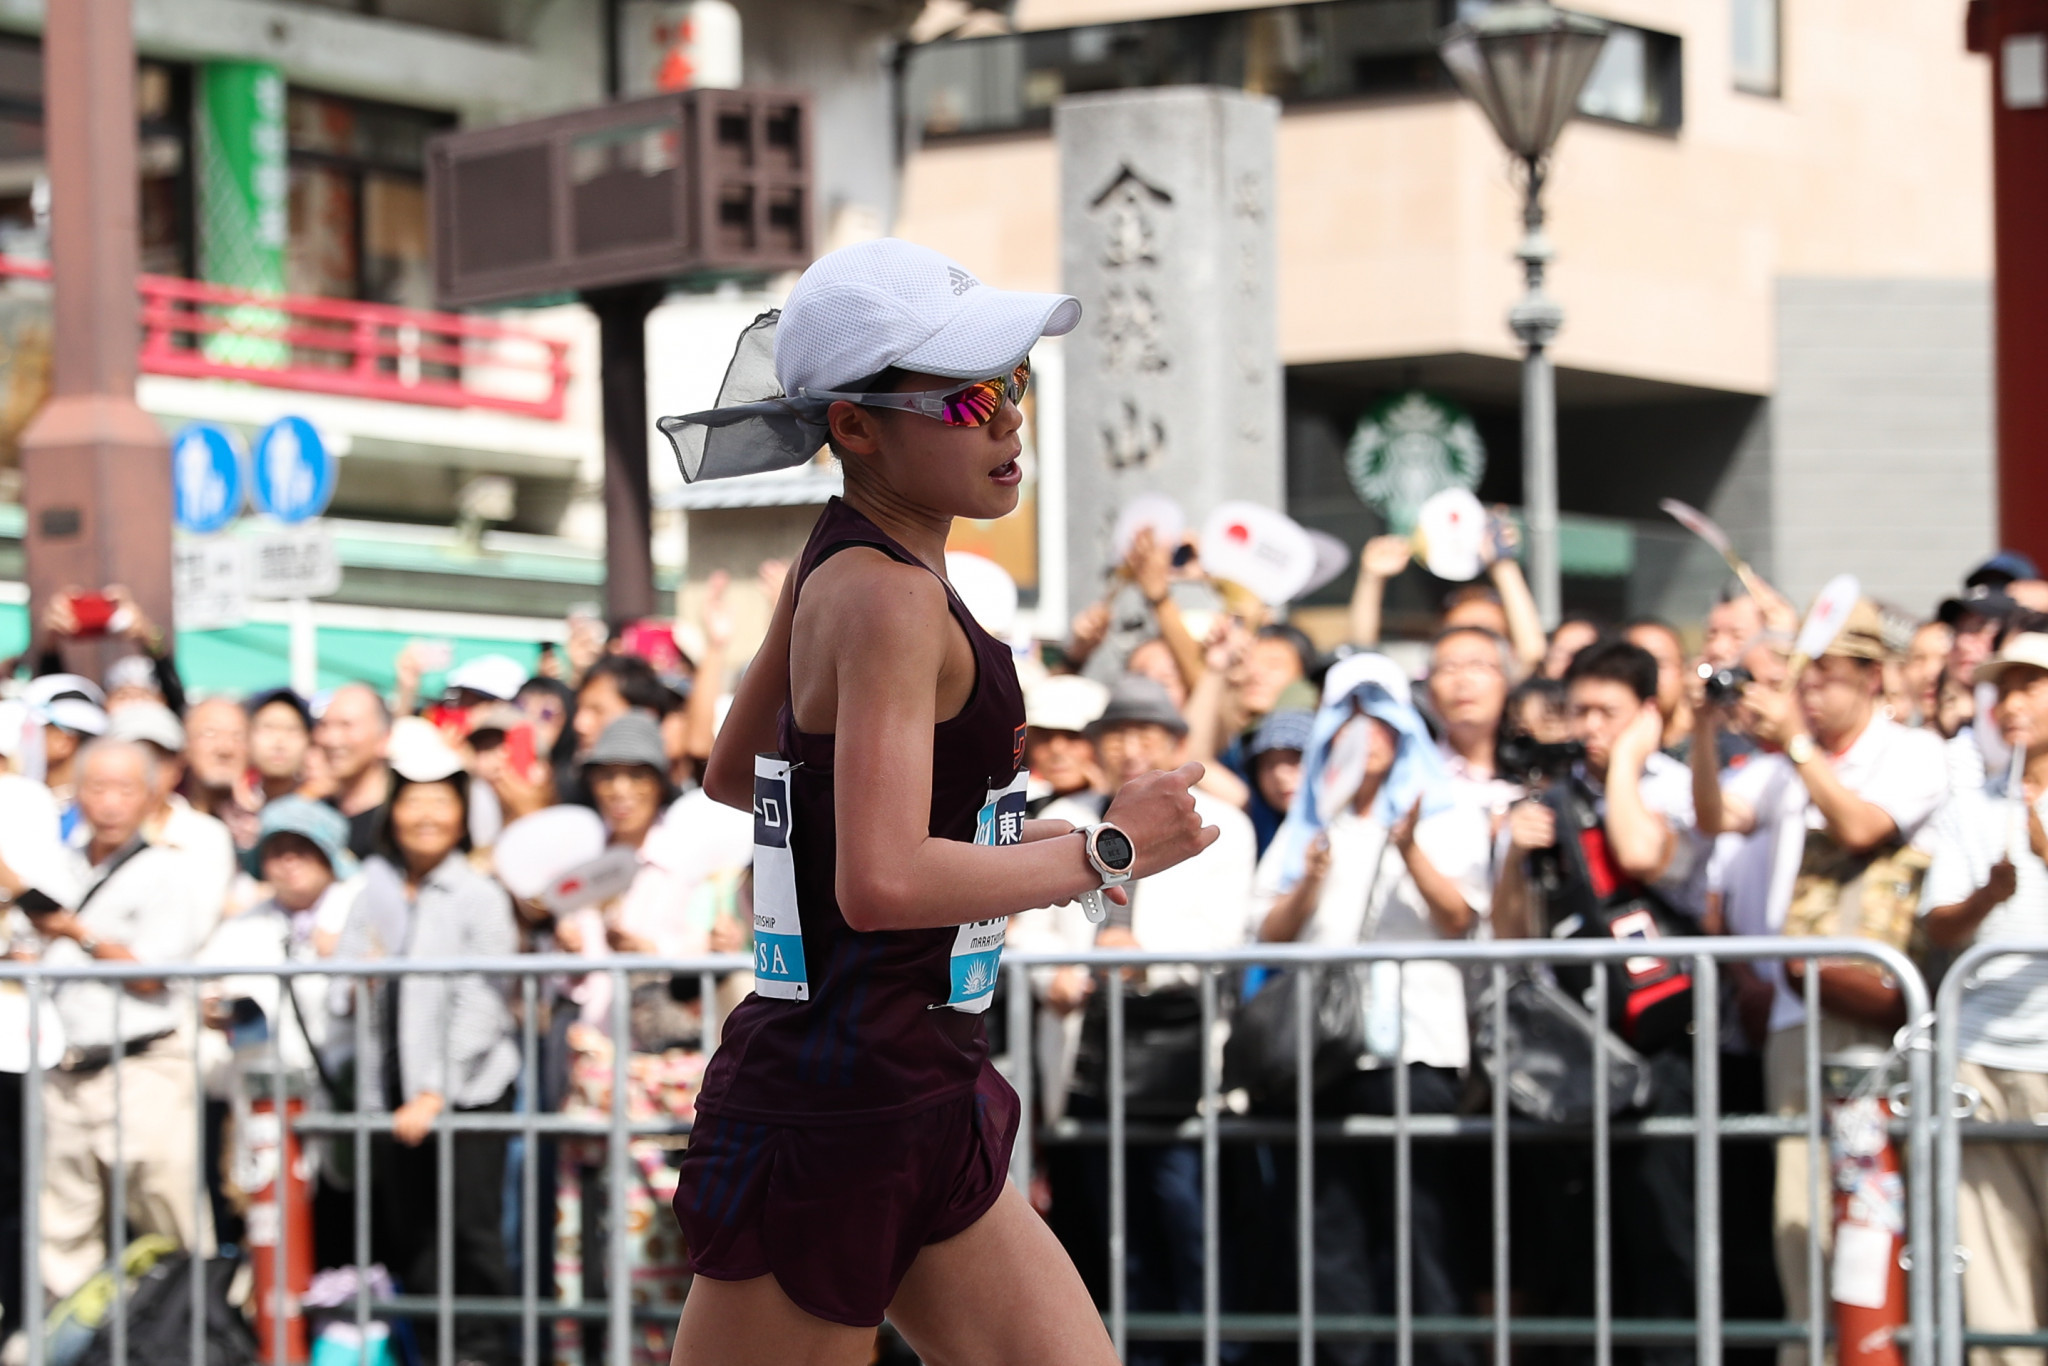 Mao Ichiyama won the Nagoya Women's Marathon to qualify for Tokyo 2020 ©Getty Images